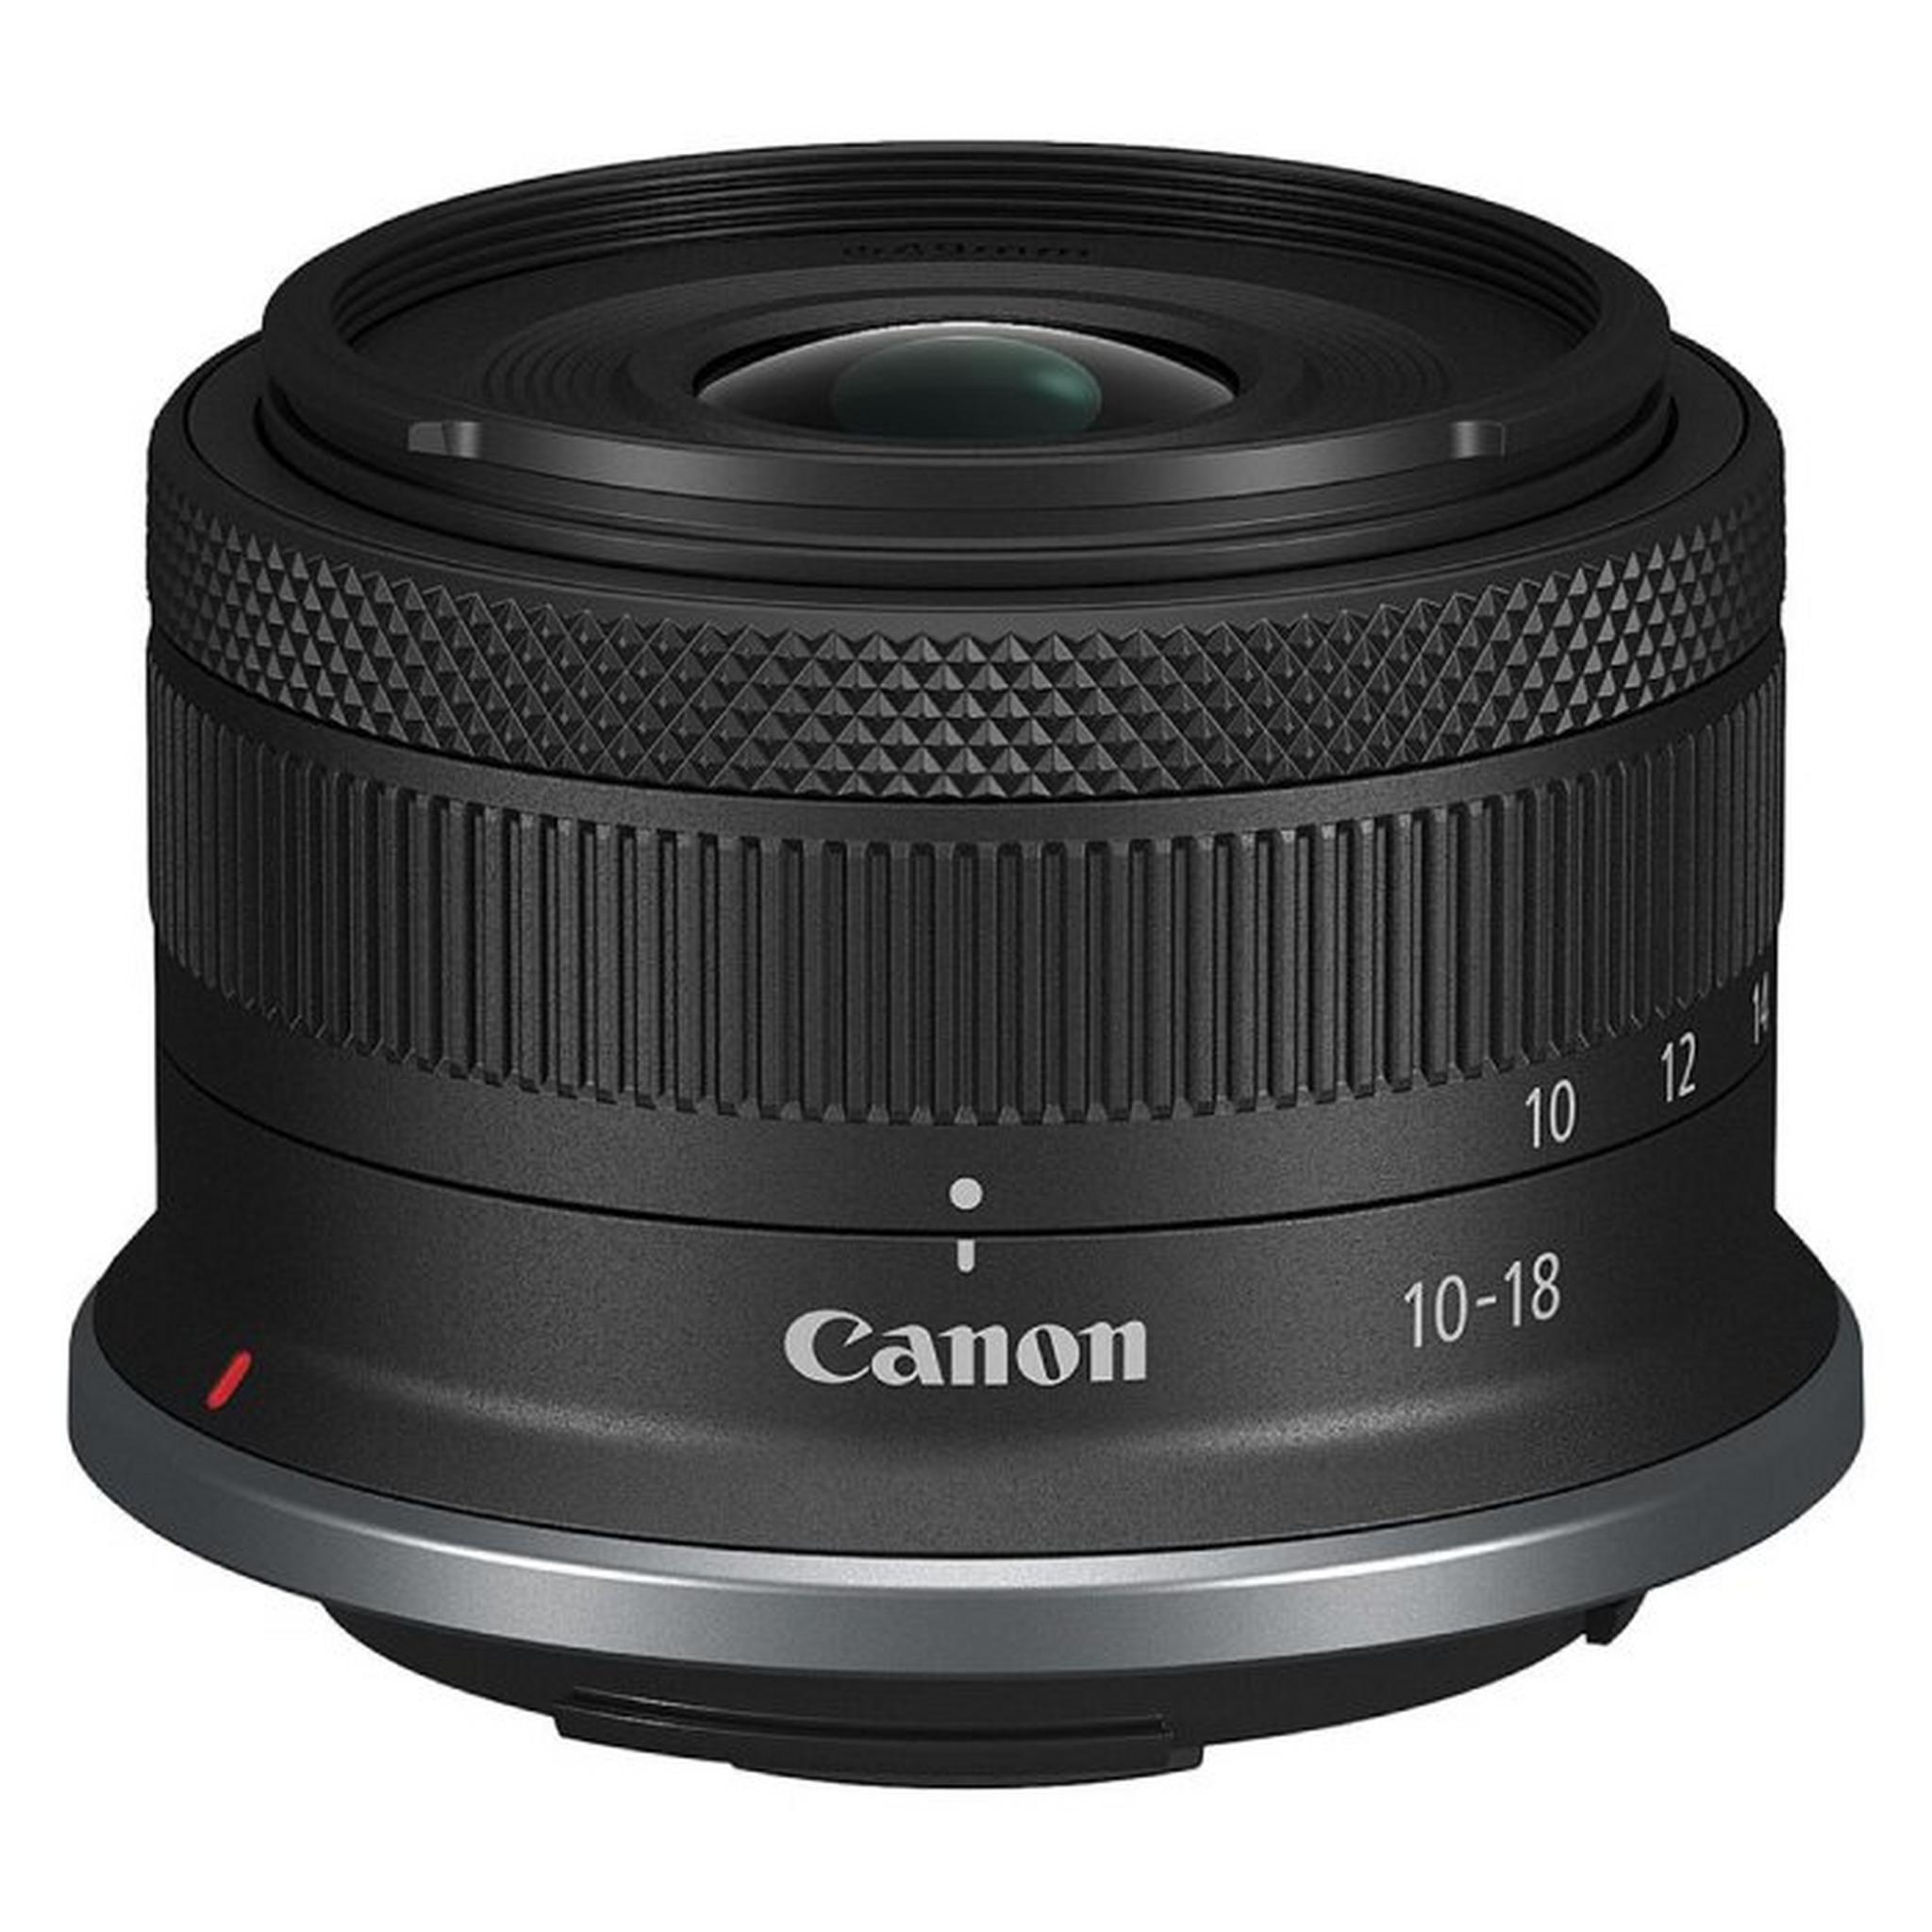 CANON RF 10-18MM Lens, F/4.5-6.3 IS STM, 6262C005AA – Black